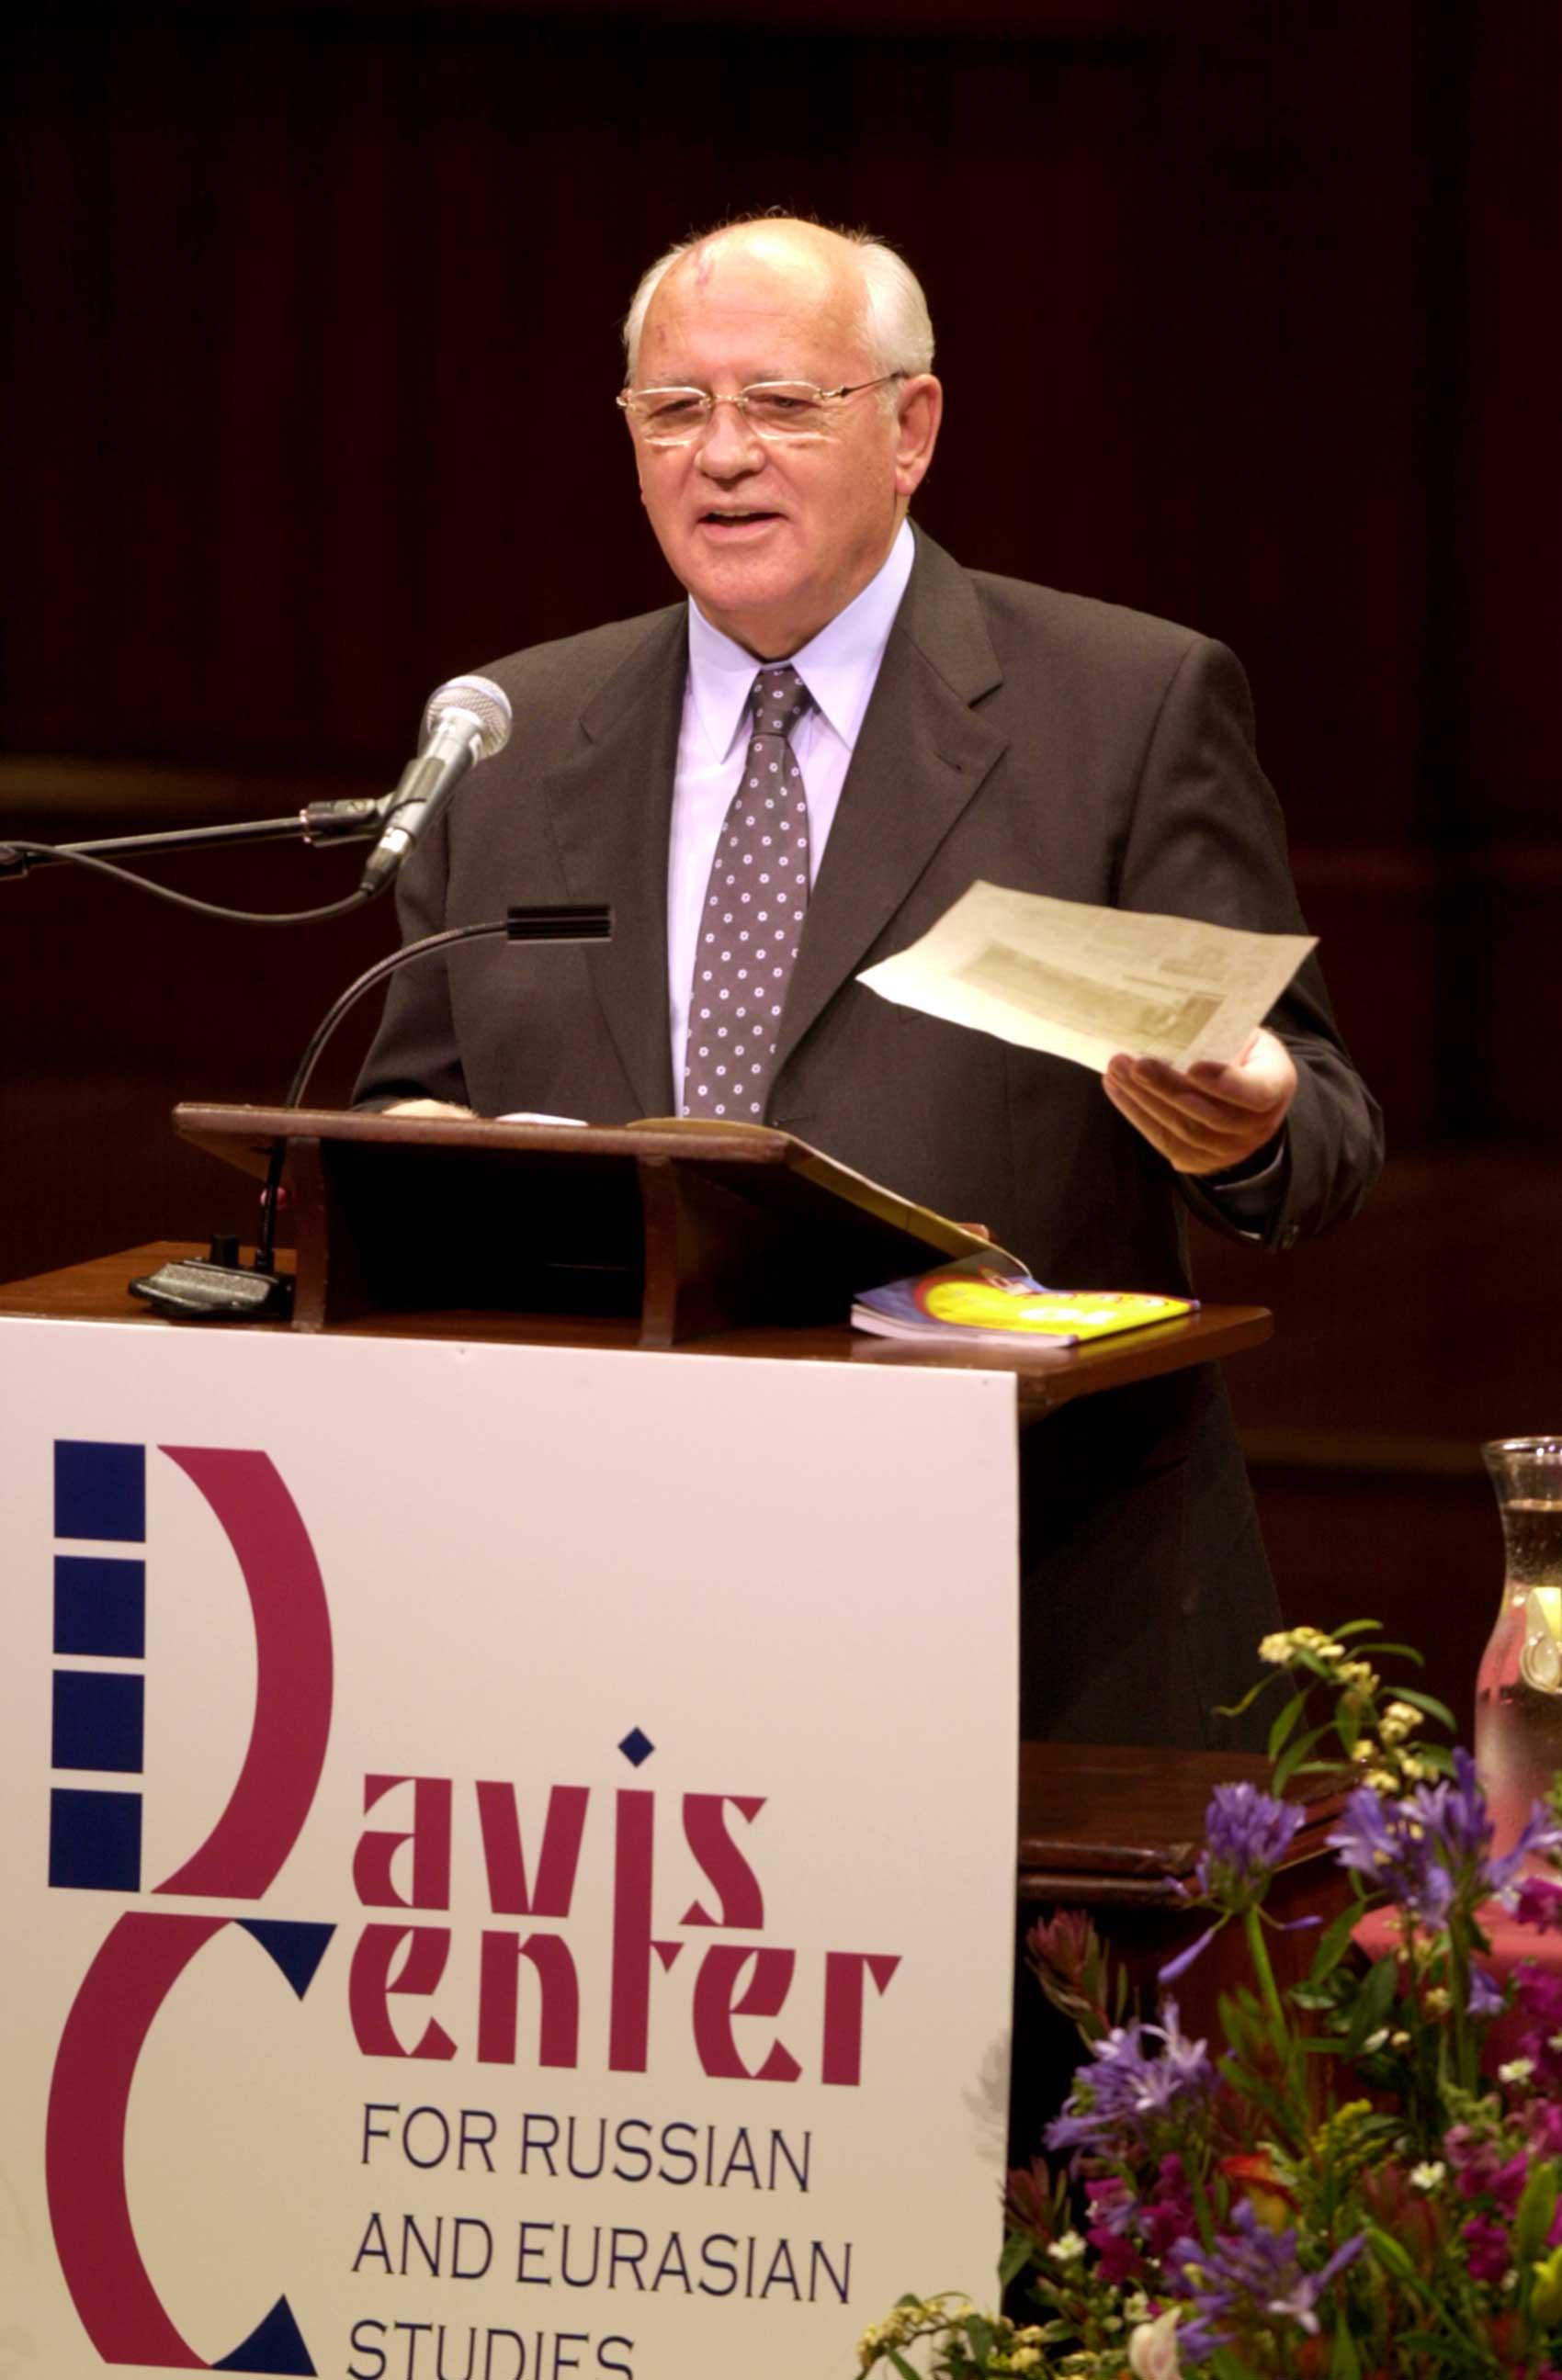 Mikhail Gorbachev at podium with Davis Center logo